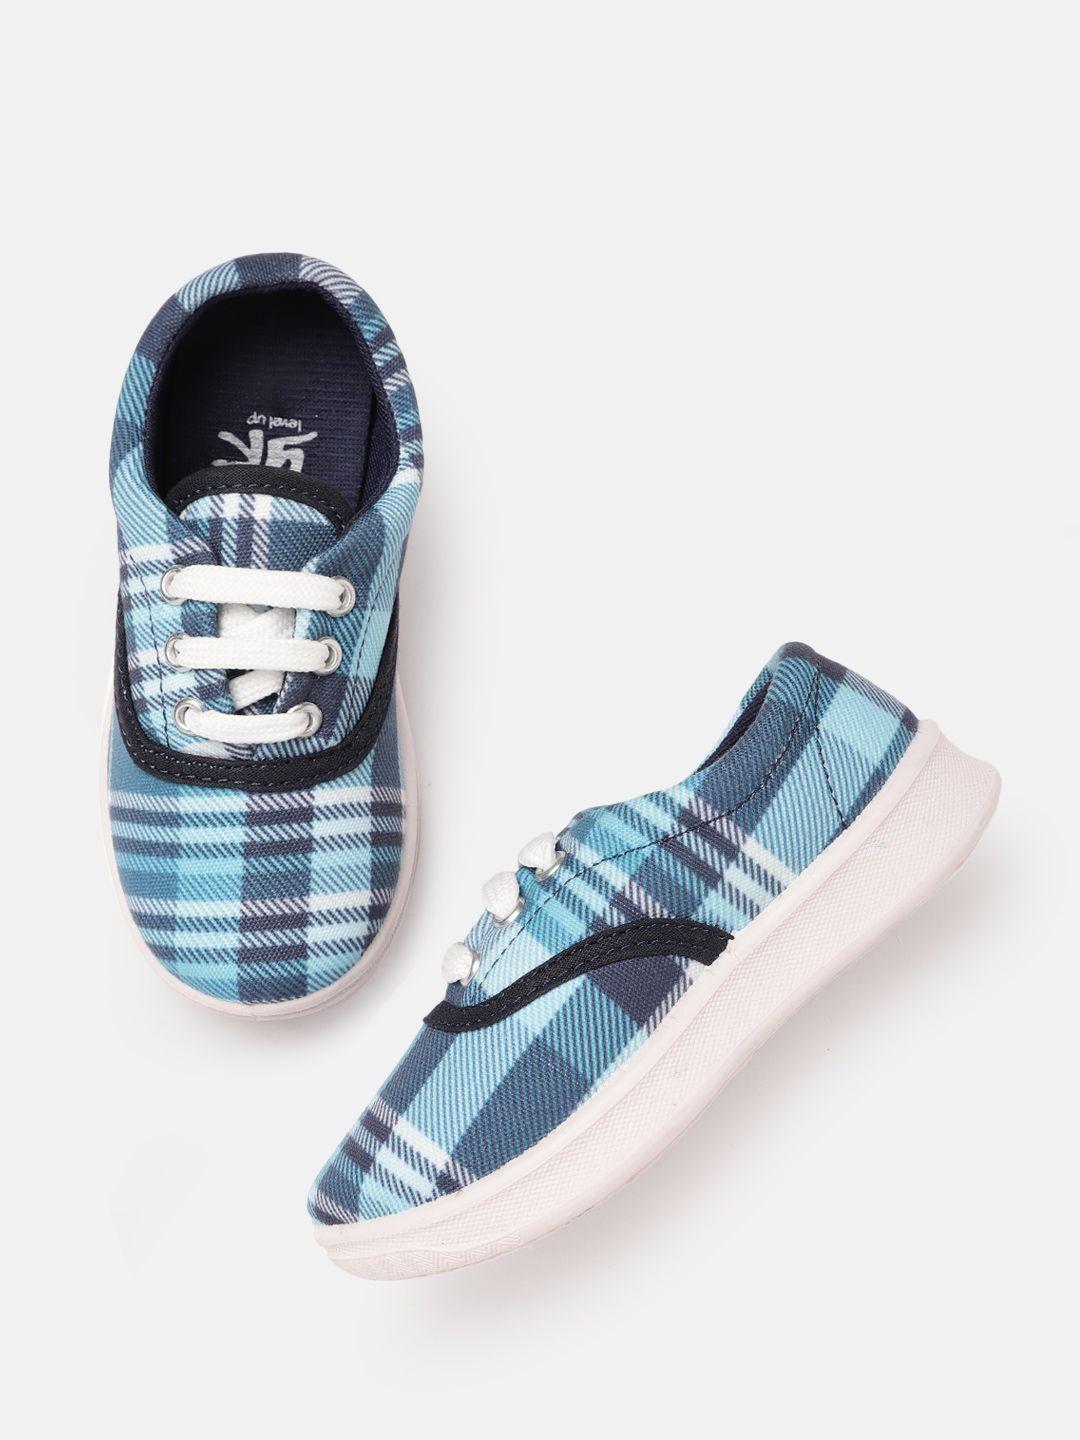 yk-boys-blue-&-white-checked-sneakers